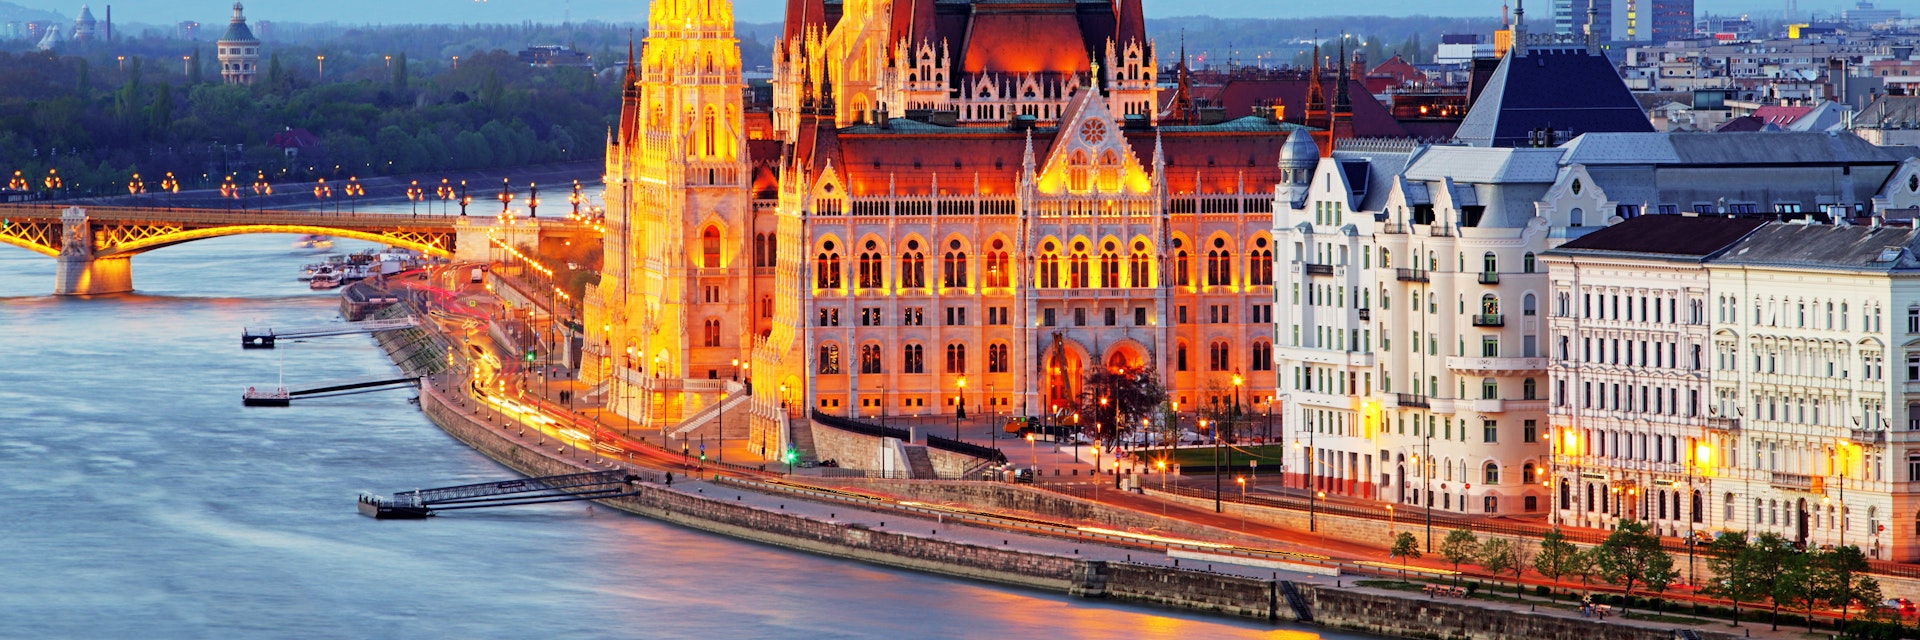 Hungarian Parliament Building at night.